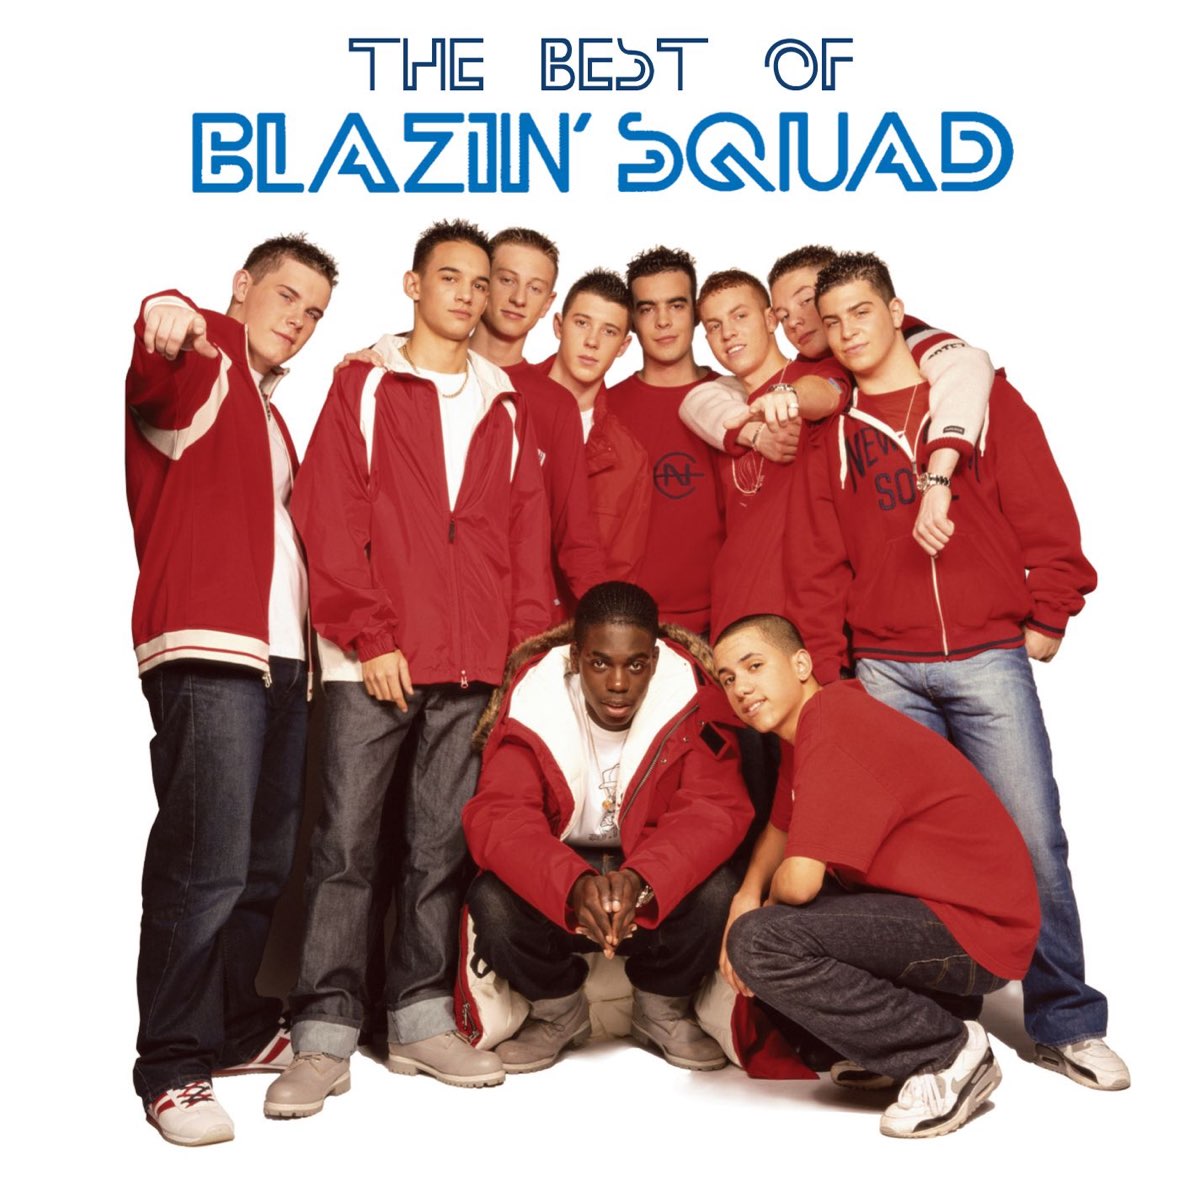 ‎The Best of Blazin' Squad - Album by Blazin' Squad - Apple Music